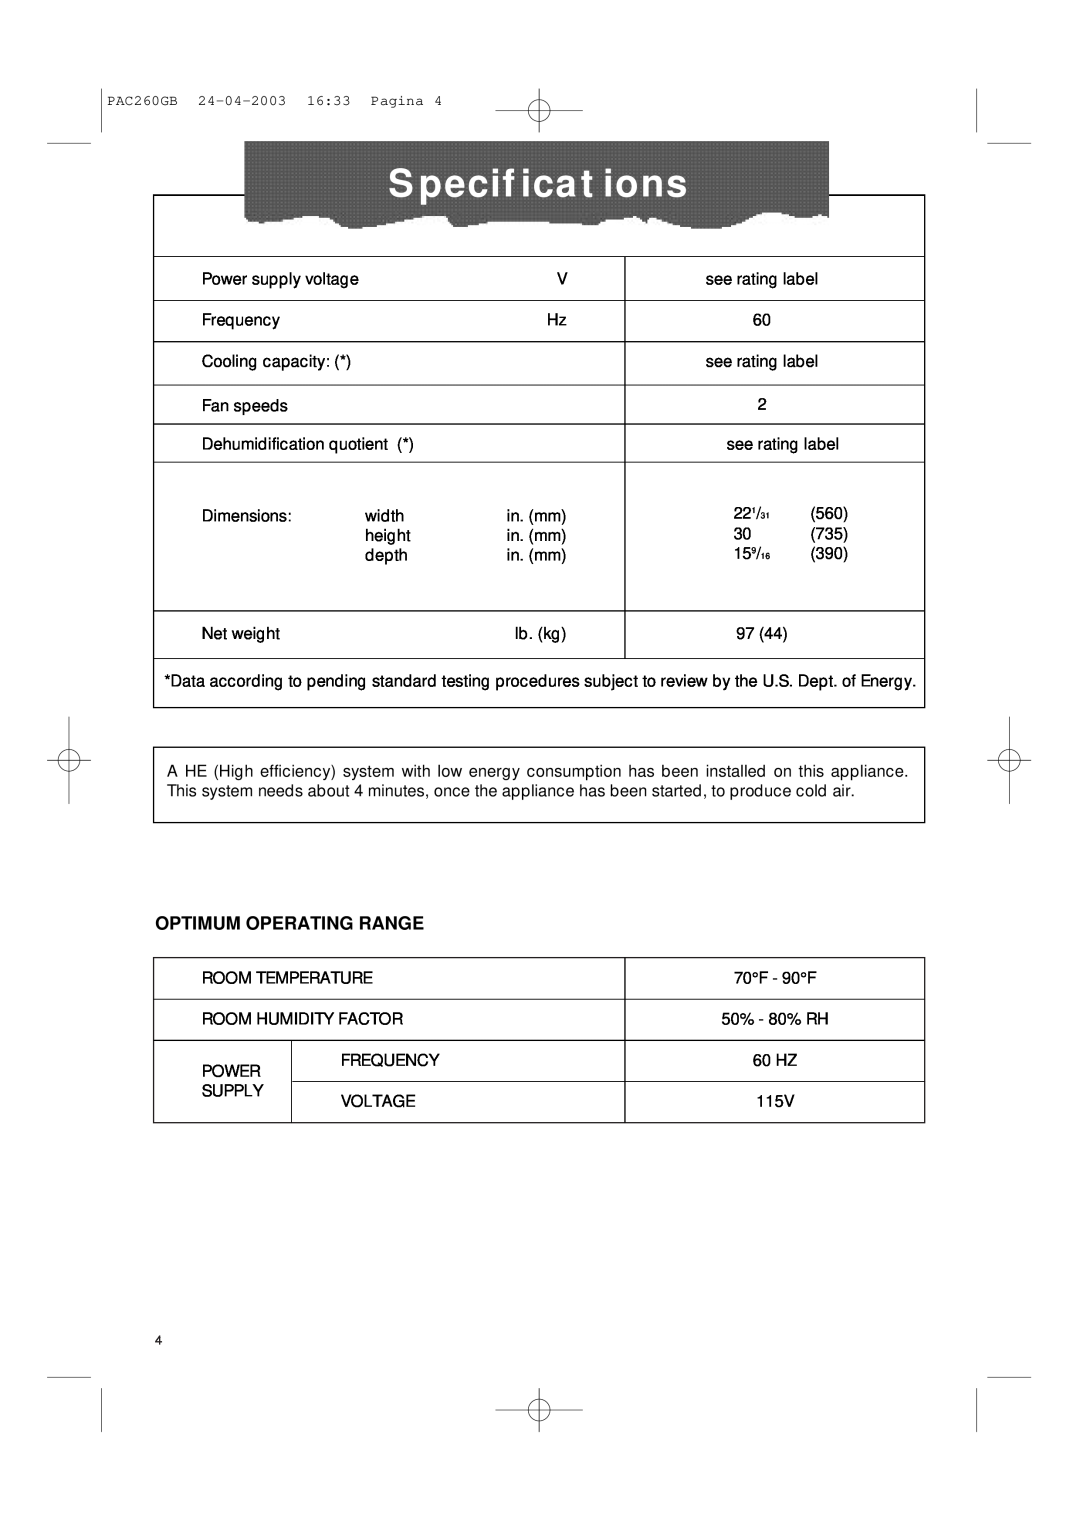 DeLonghi PAC260 manual Specifications, Optimum Operating Range 